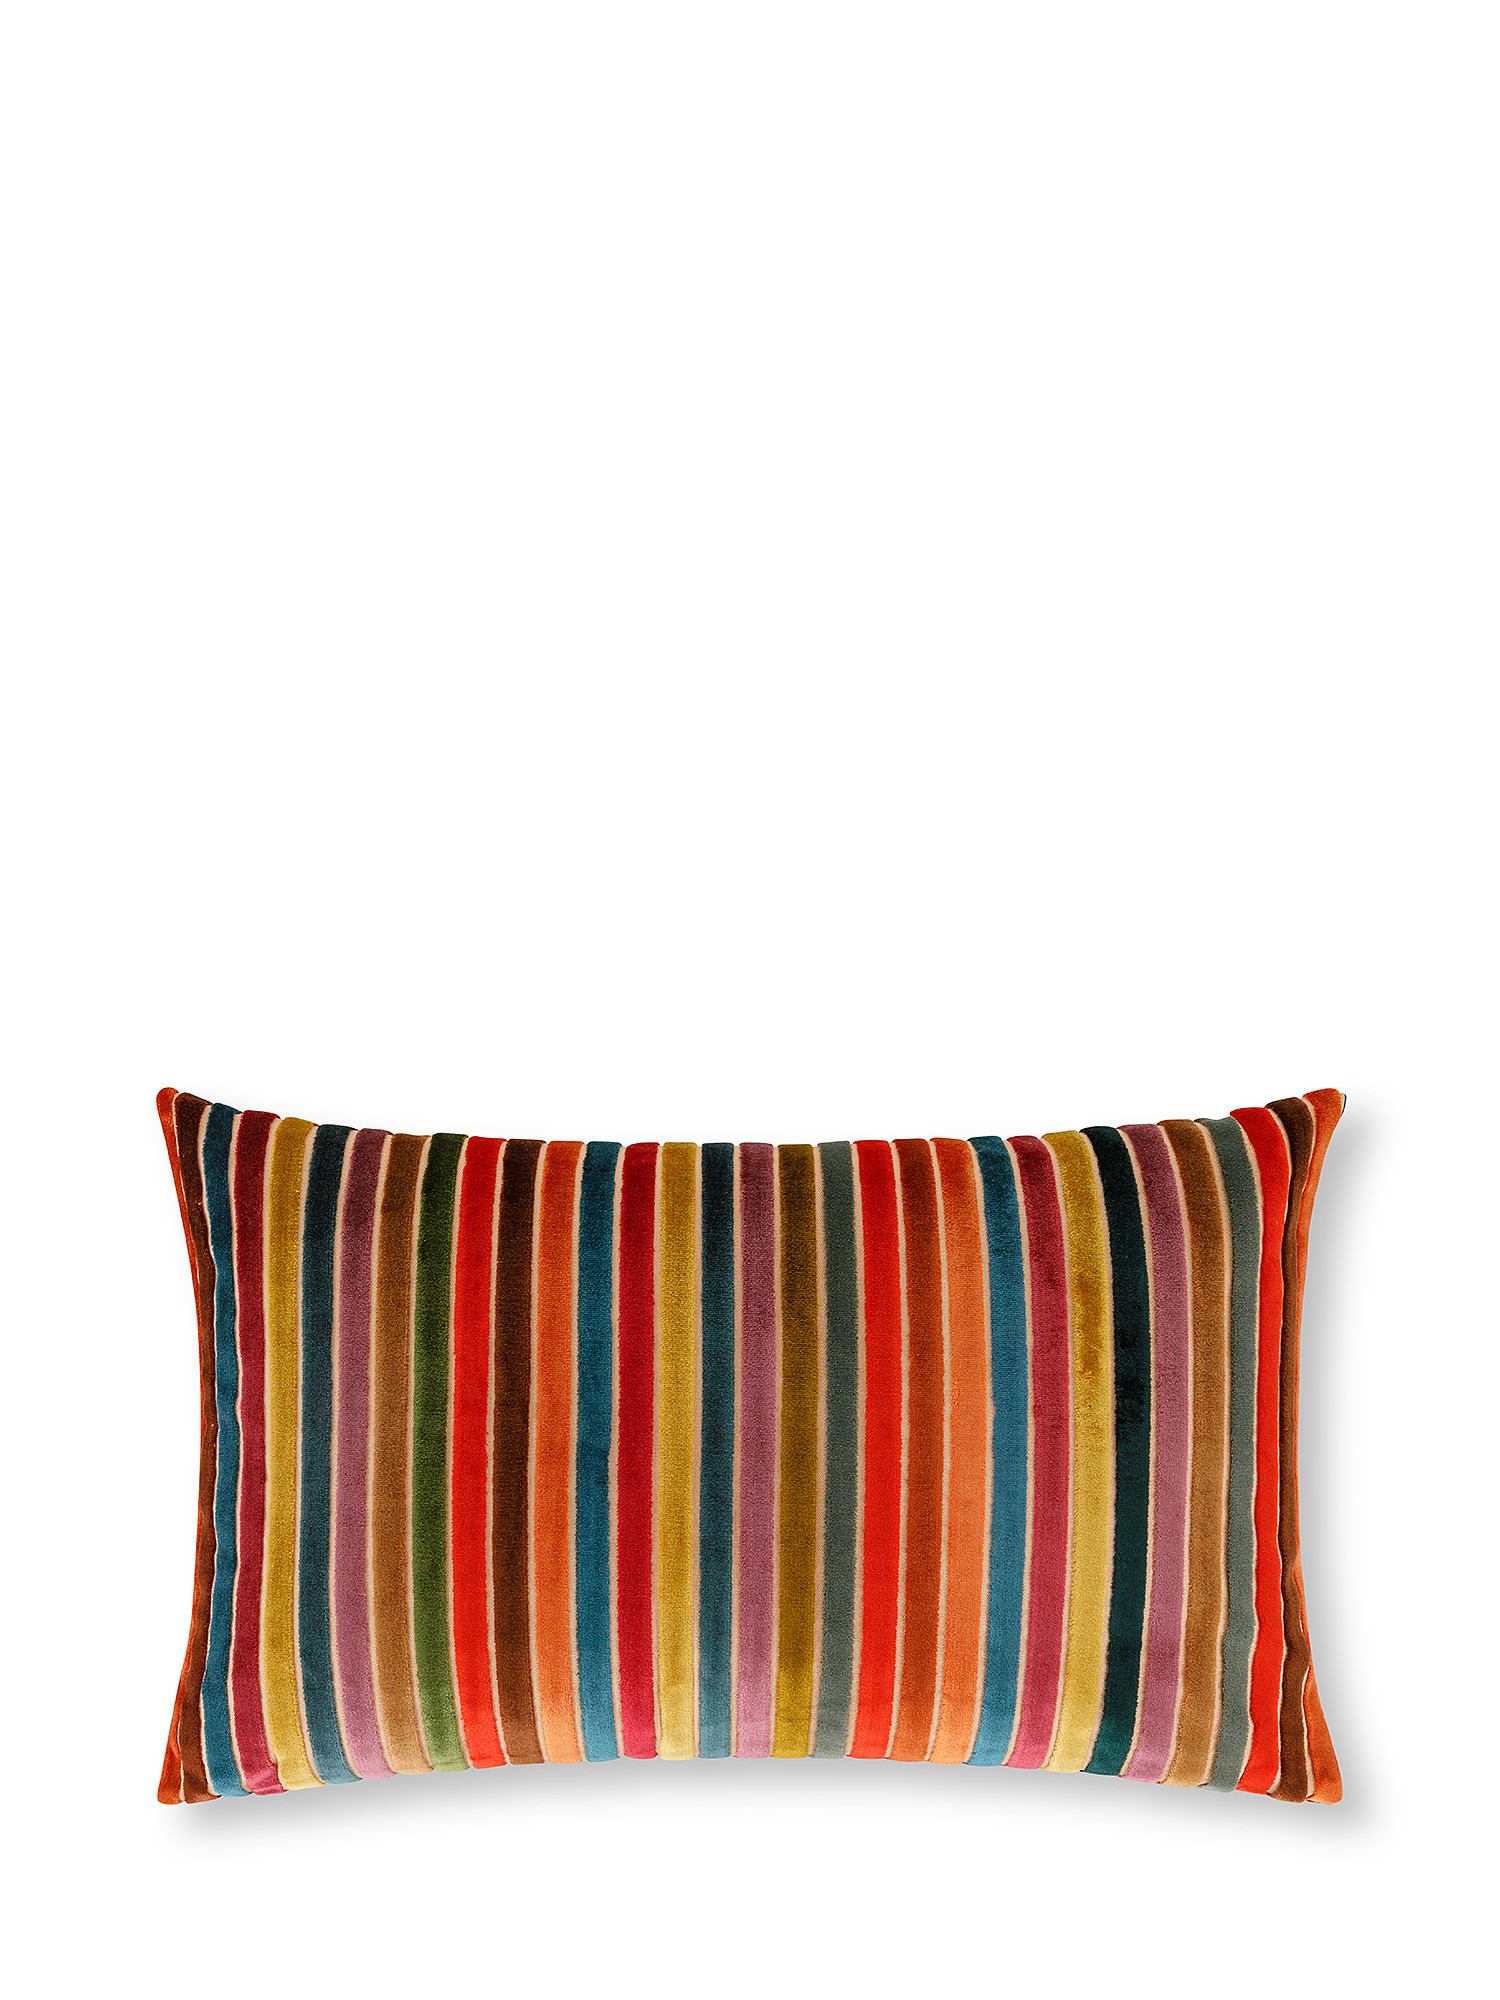 Striped velvet cushion 35x55cm, Multicolor, large image number 0